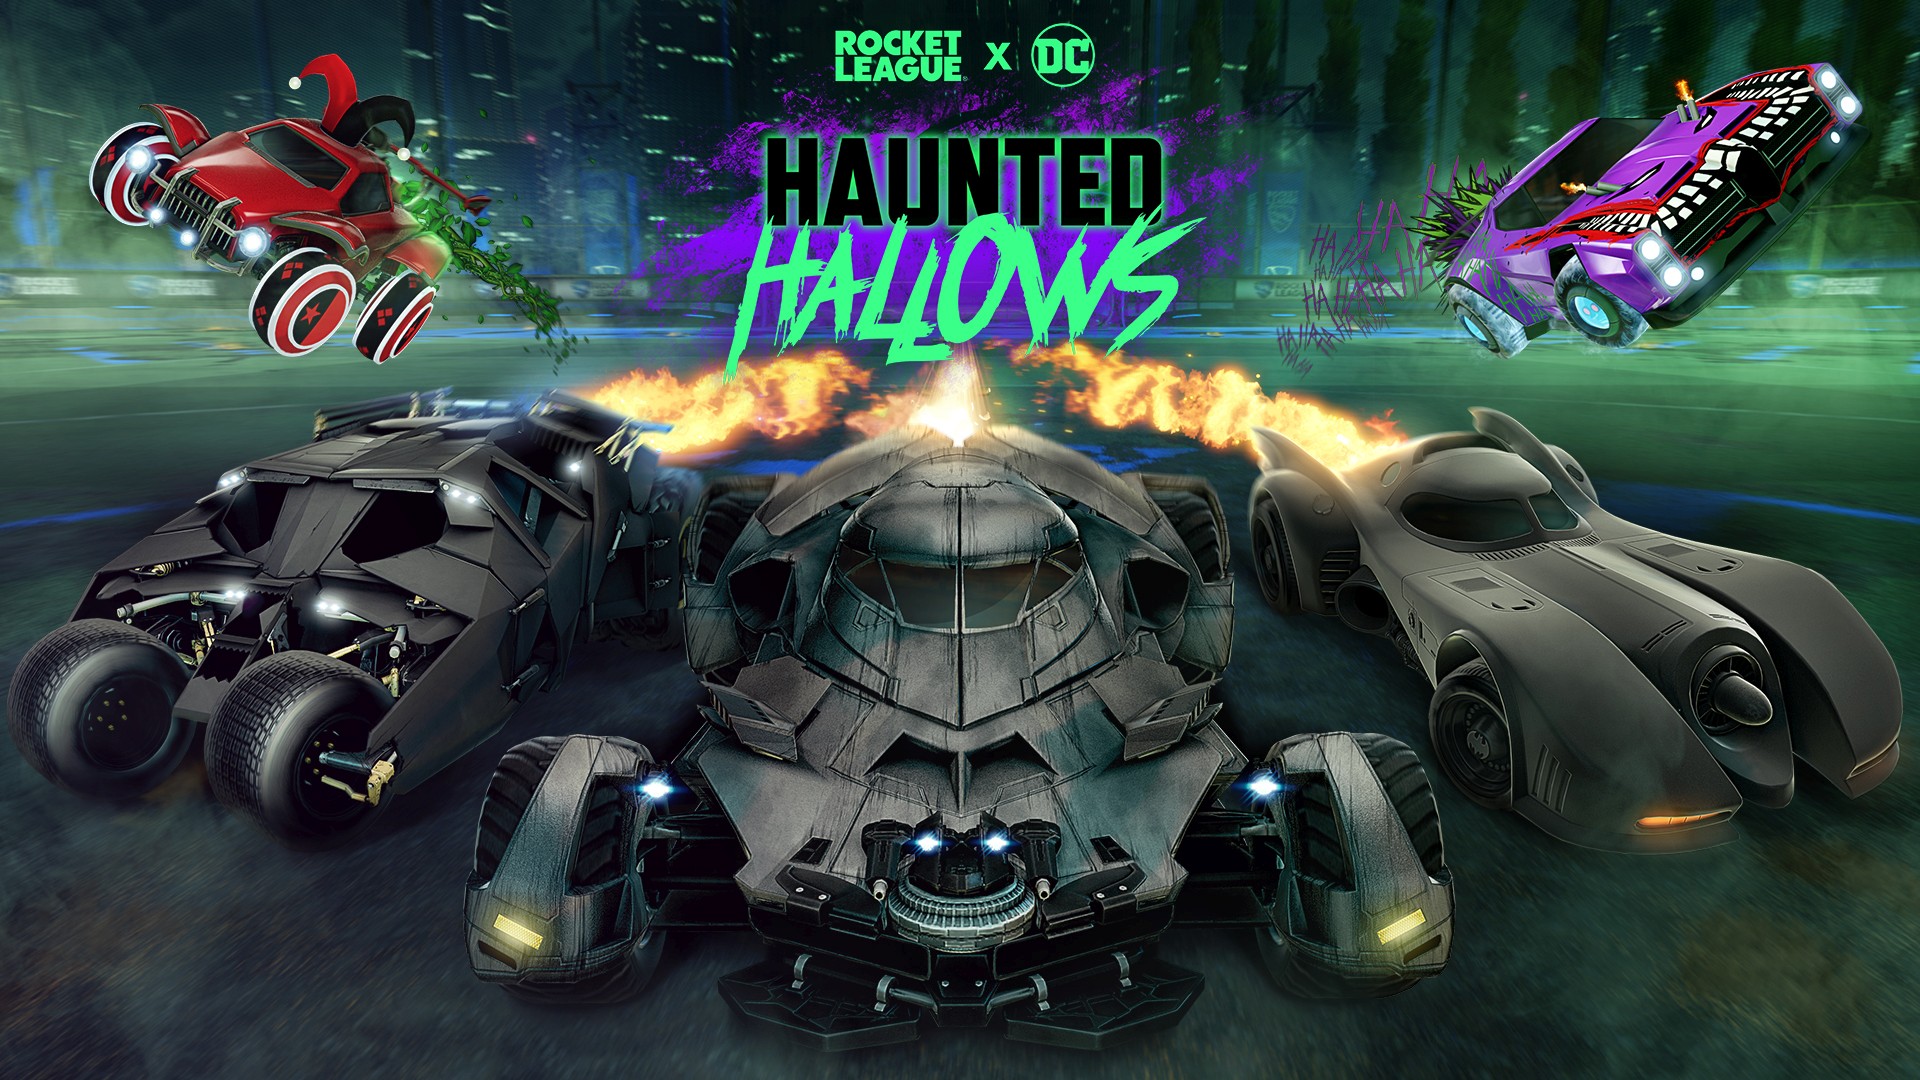 Batman Super-Villains Take Over Haunted Hallows in Rocket League - Xbox Wire